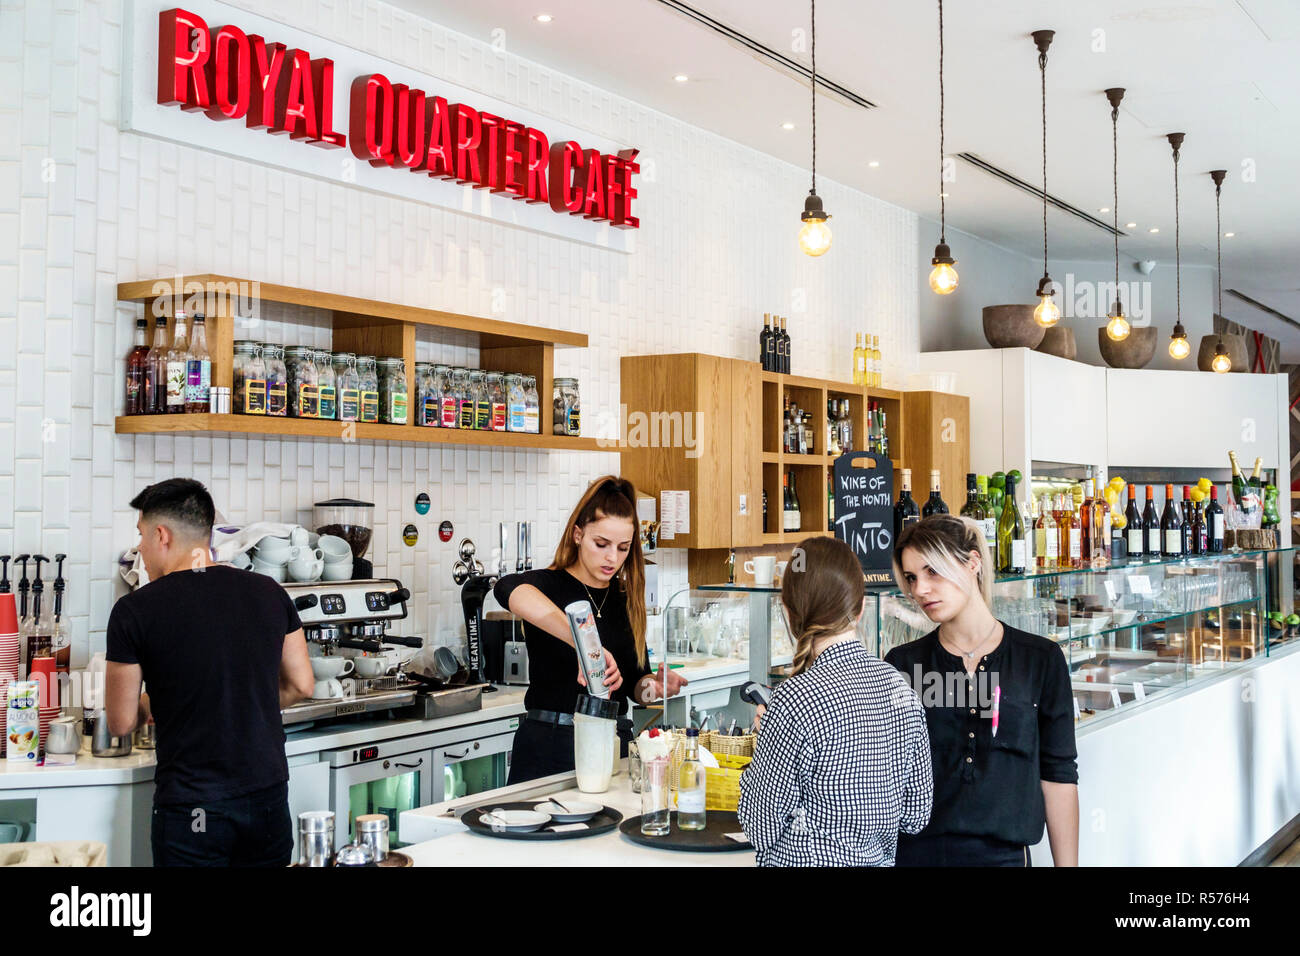 London England,UK,Westminster,Royal Quarter Cafe,restaurant restaurants food dining cafe cafes,interior inside,modern European cuisine,dining,counter, Stock Photo